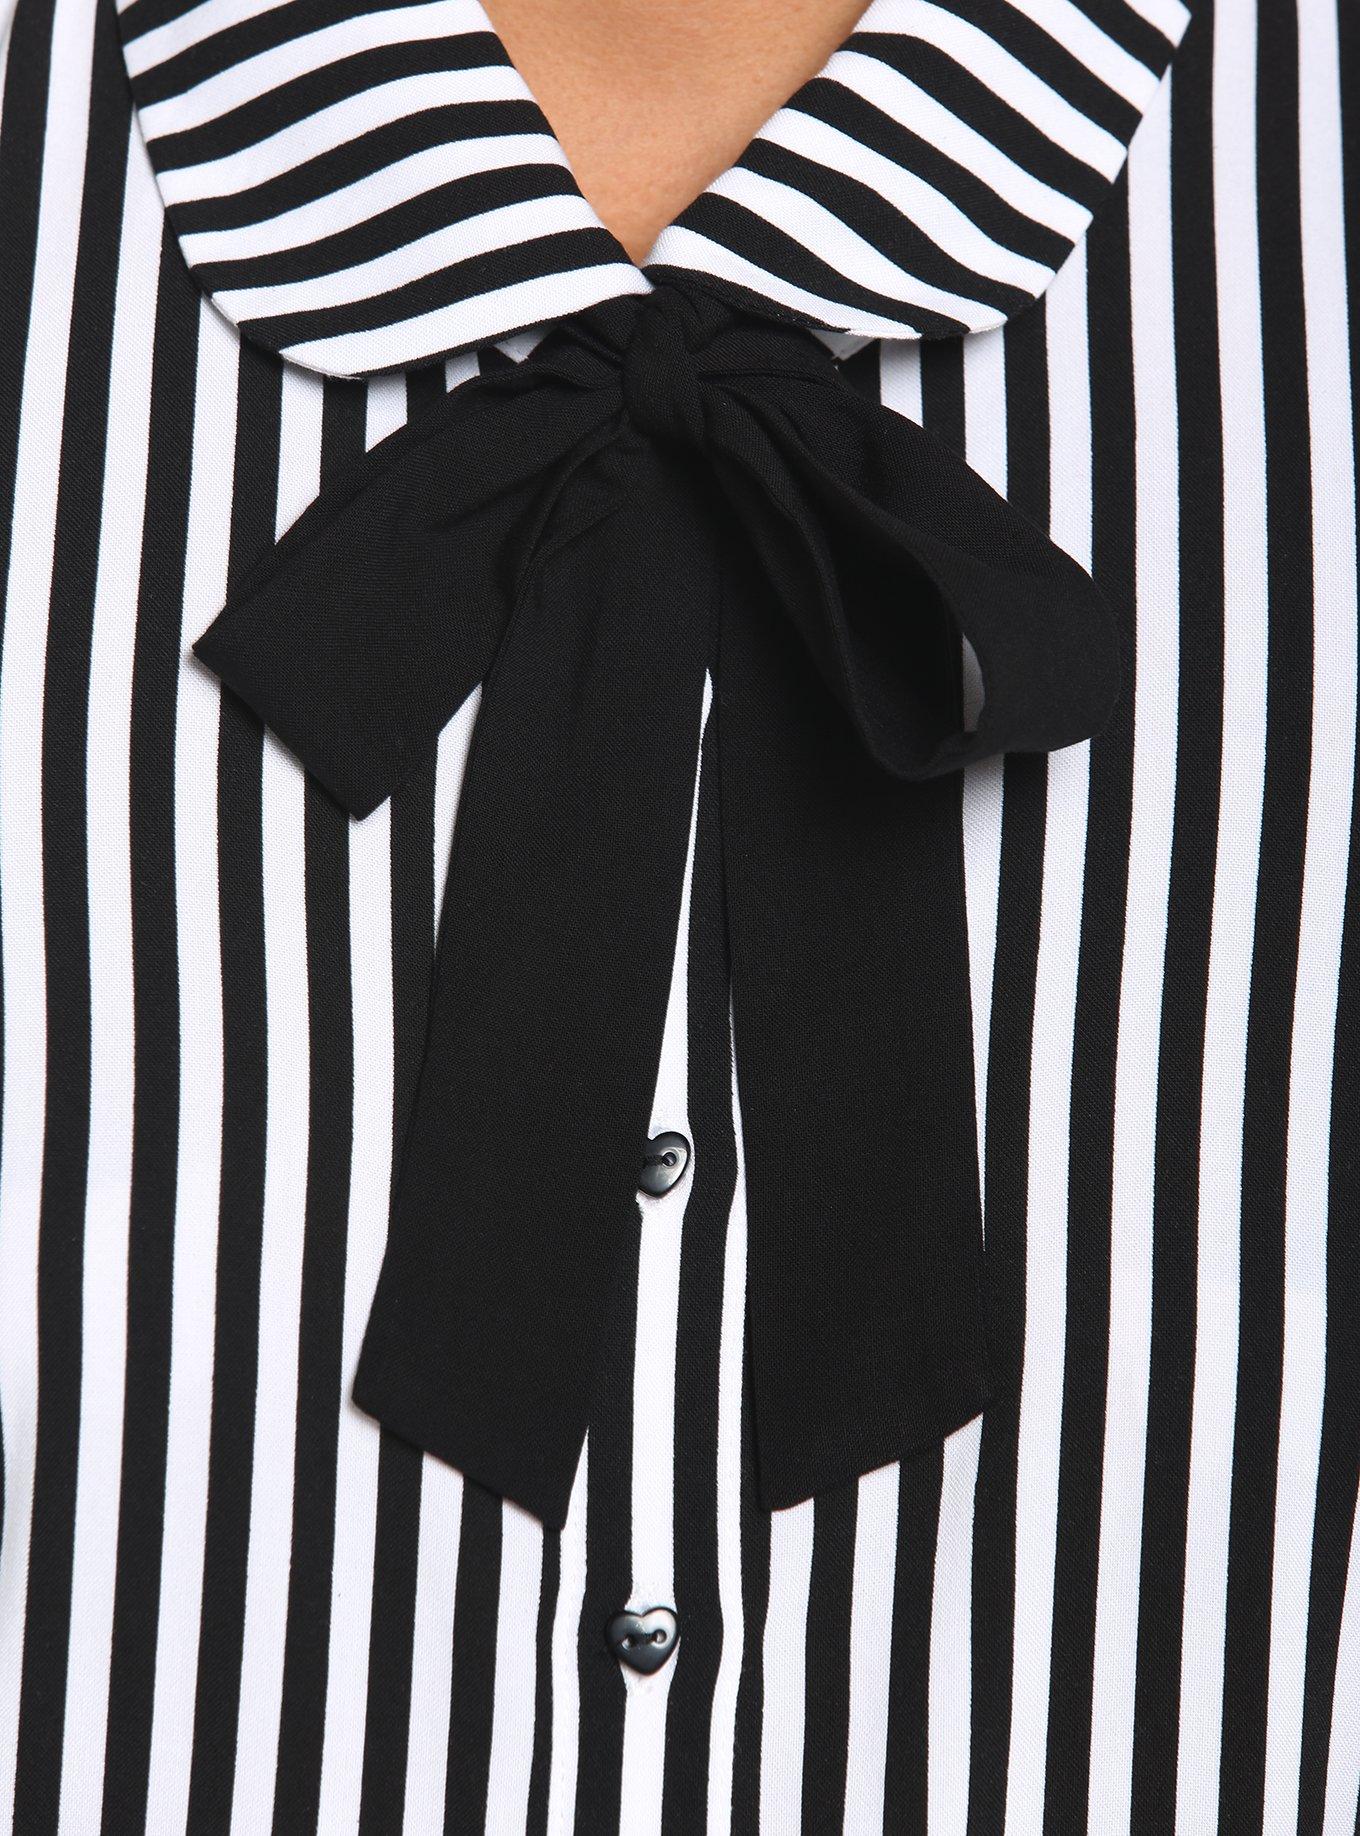 Black & White Pinstripe Bow Girls Woven Button-Up, STRIPE-BLACK WHITE, alternate